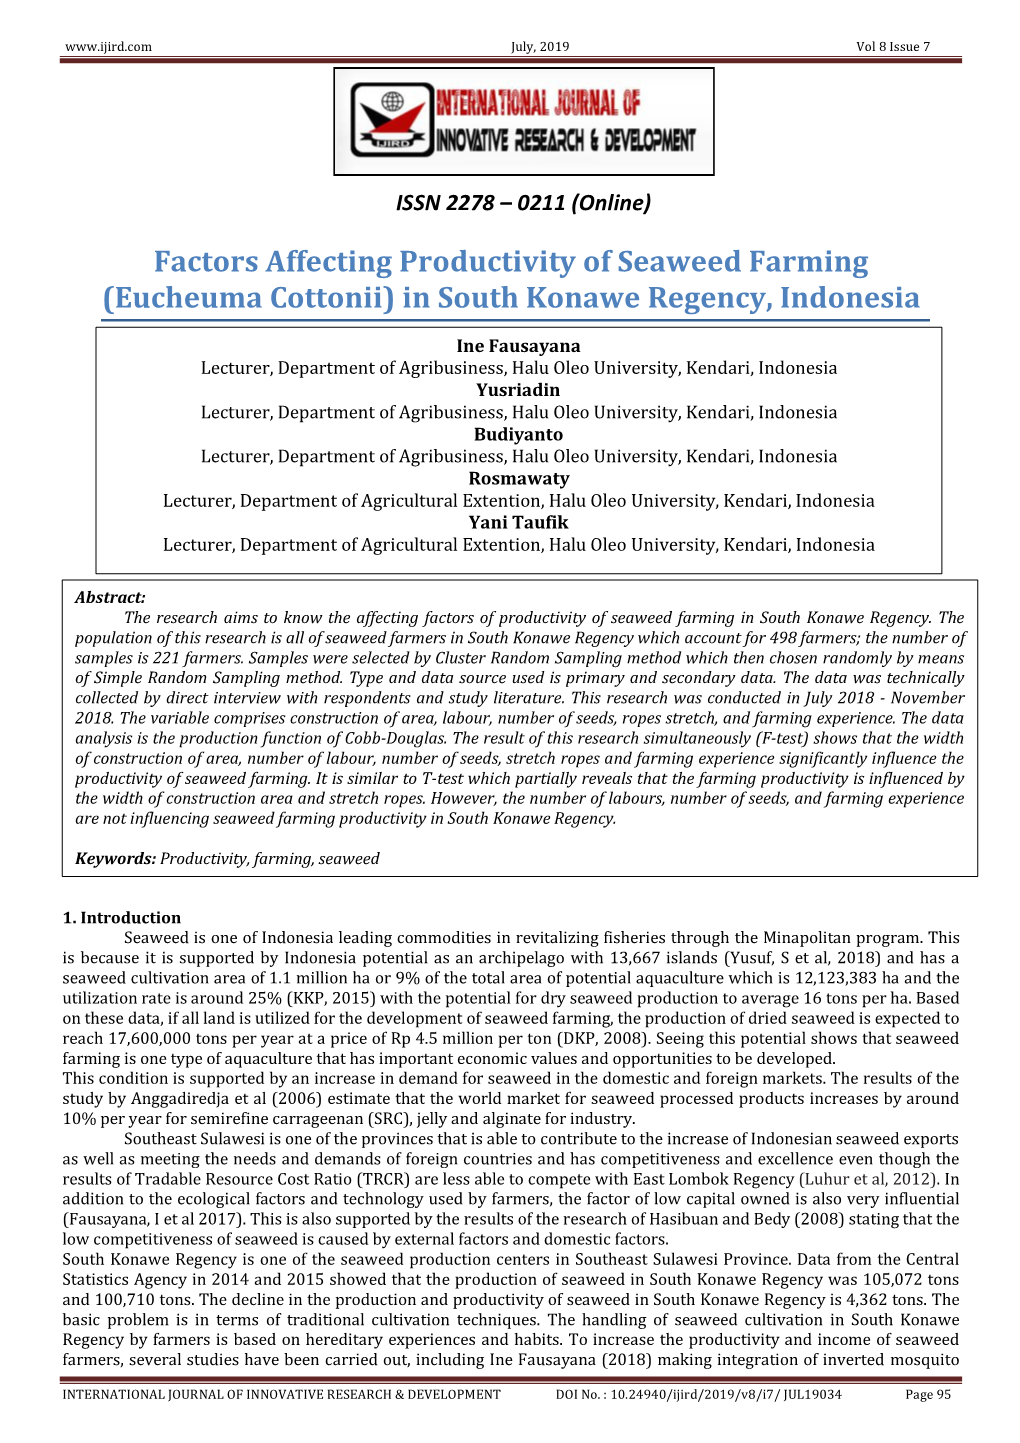 Factors Affecting Productivity of Seaweed Farming (Eucheuma Cottonii) in South Konawe Regency, Indonesia